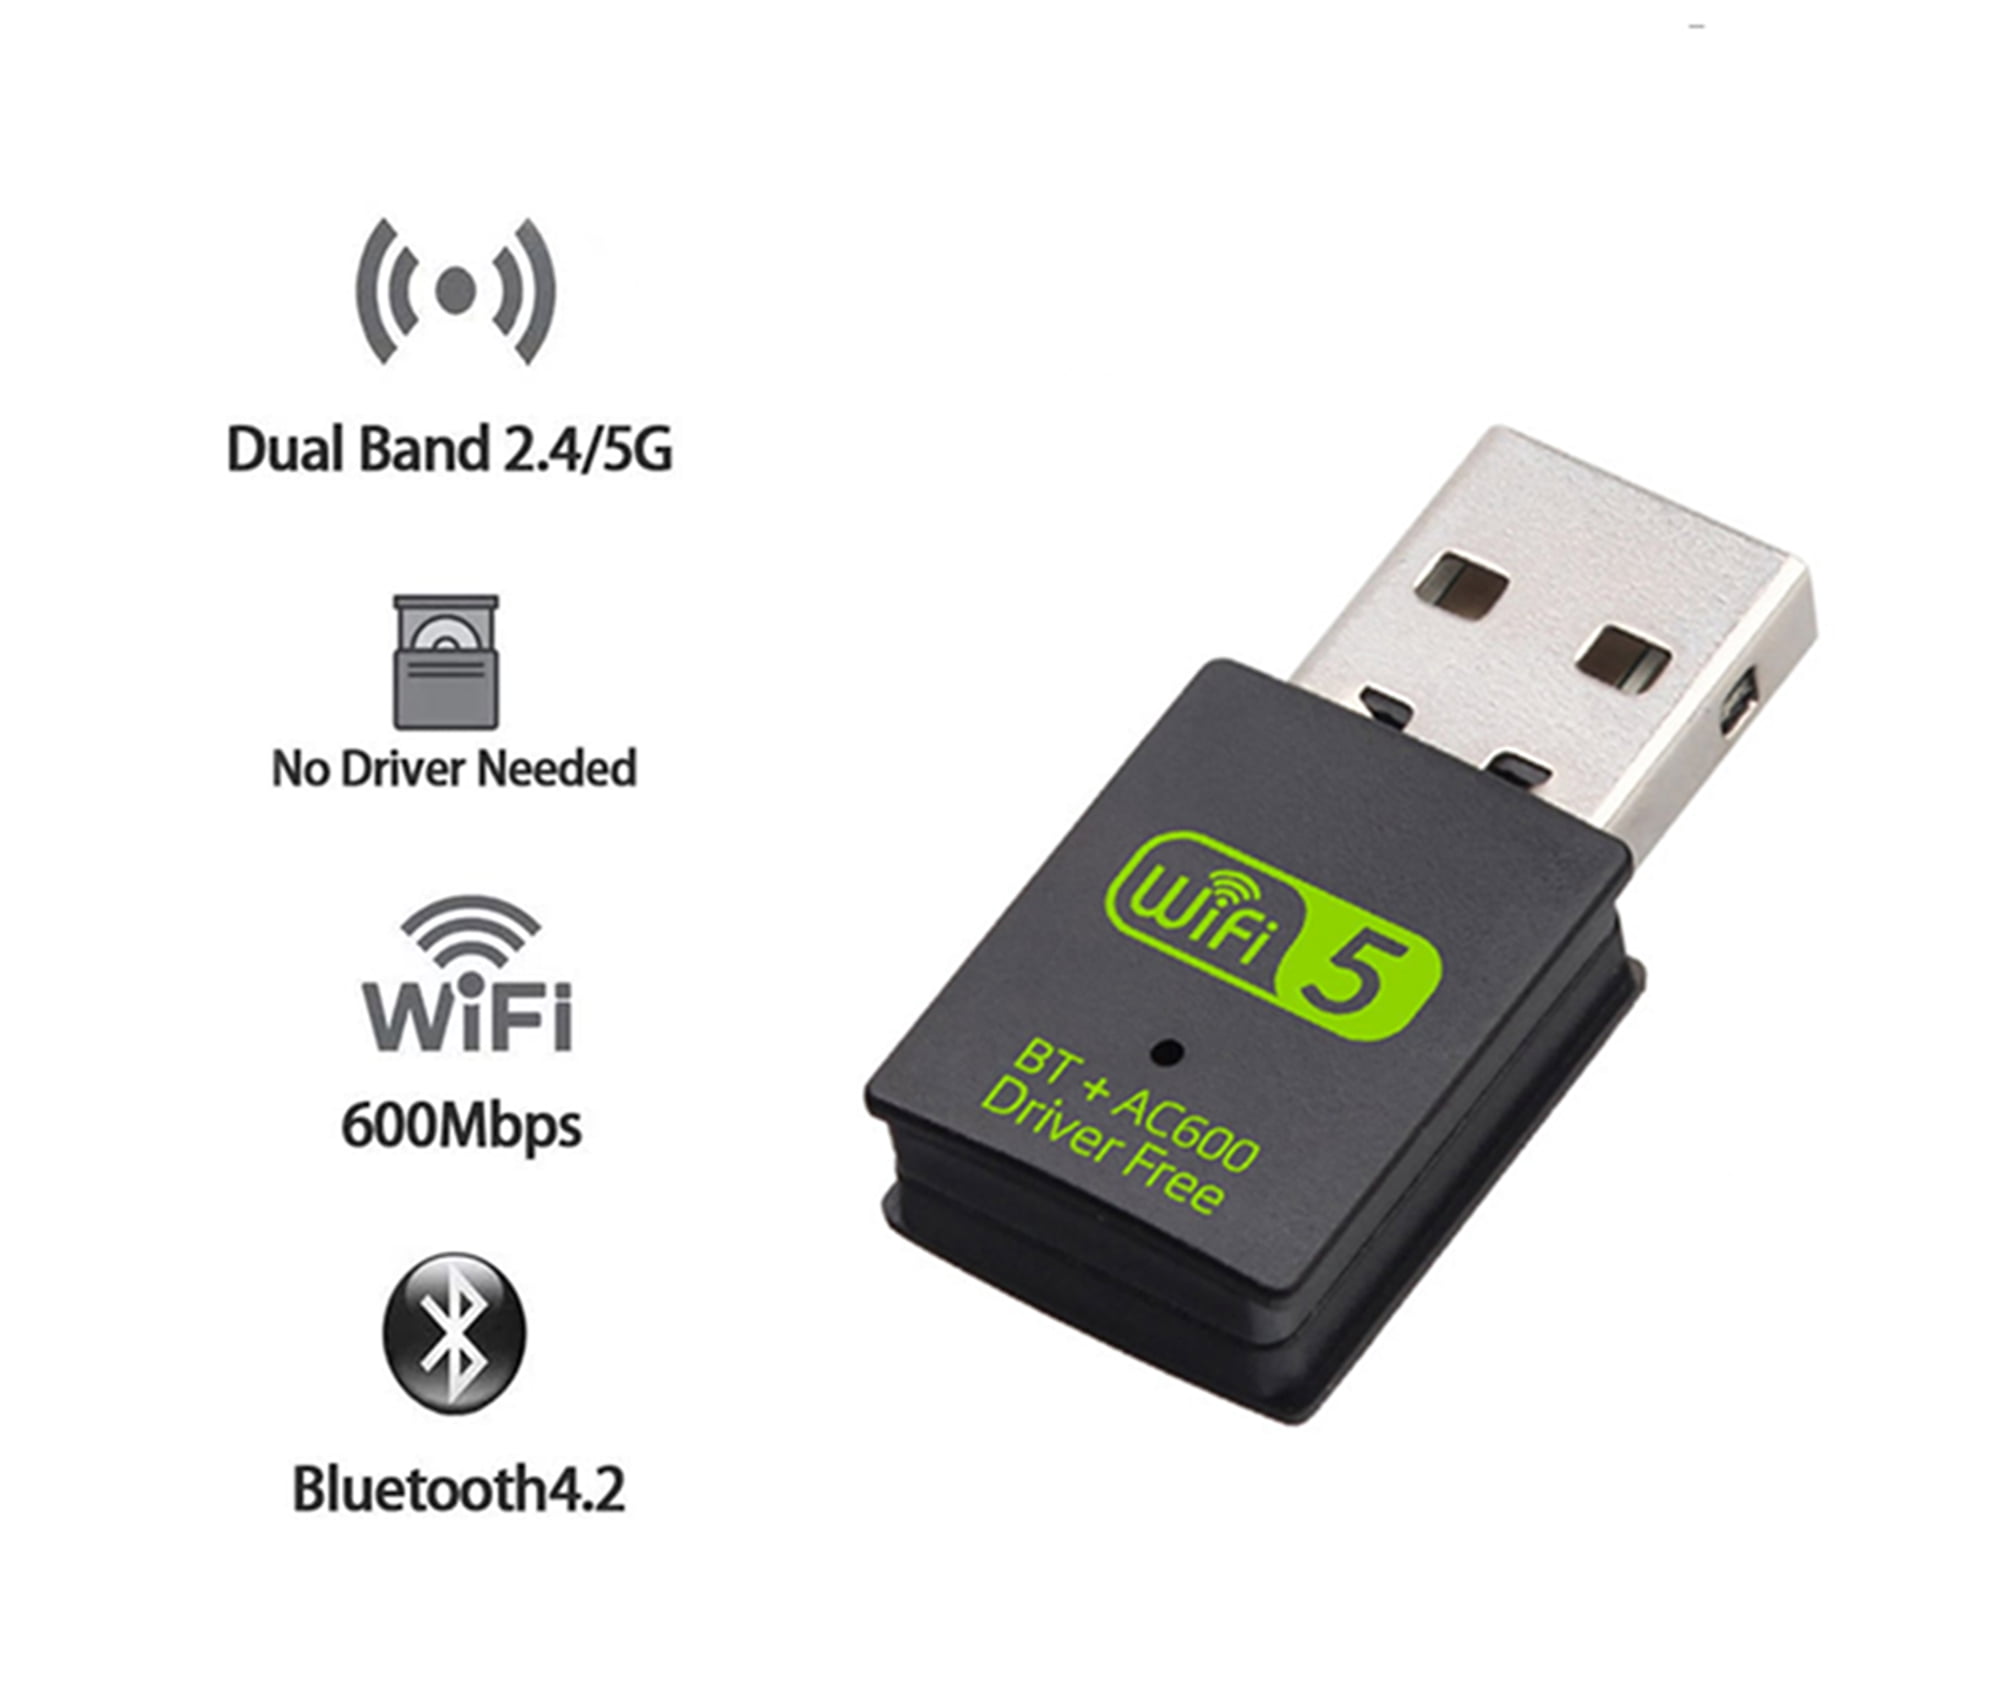 kat du er paraply USB WiFi Adapter, Bluetooth Adapter, 600Mbps Dual Band 2.4/5GHz Wireless  Network Card, USB WiFi Dongle for PC/Laptop/Desktop, Support Windows  XP/7/8.1/10 - Walmart.com